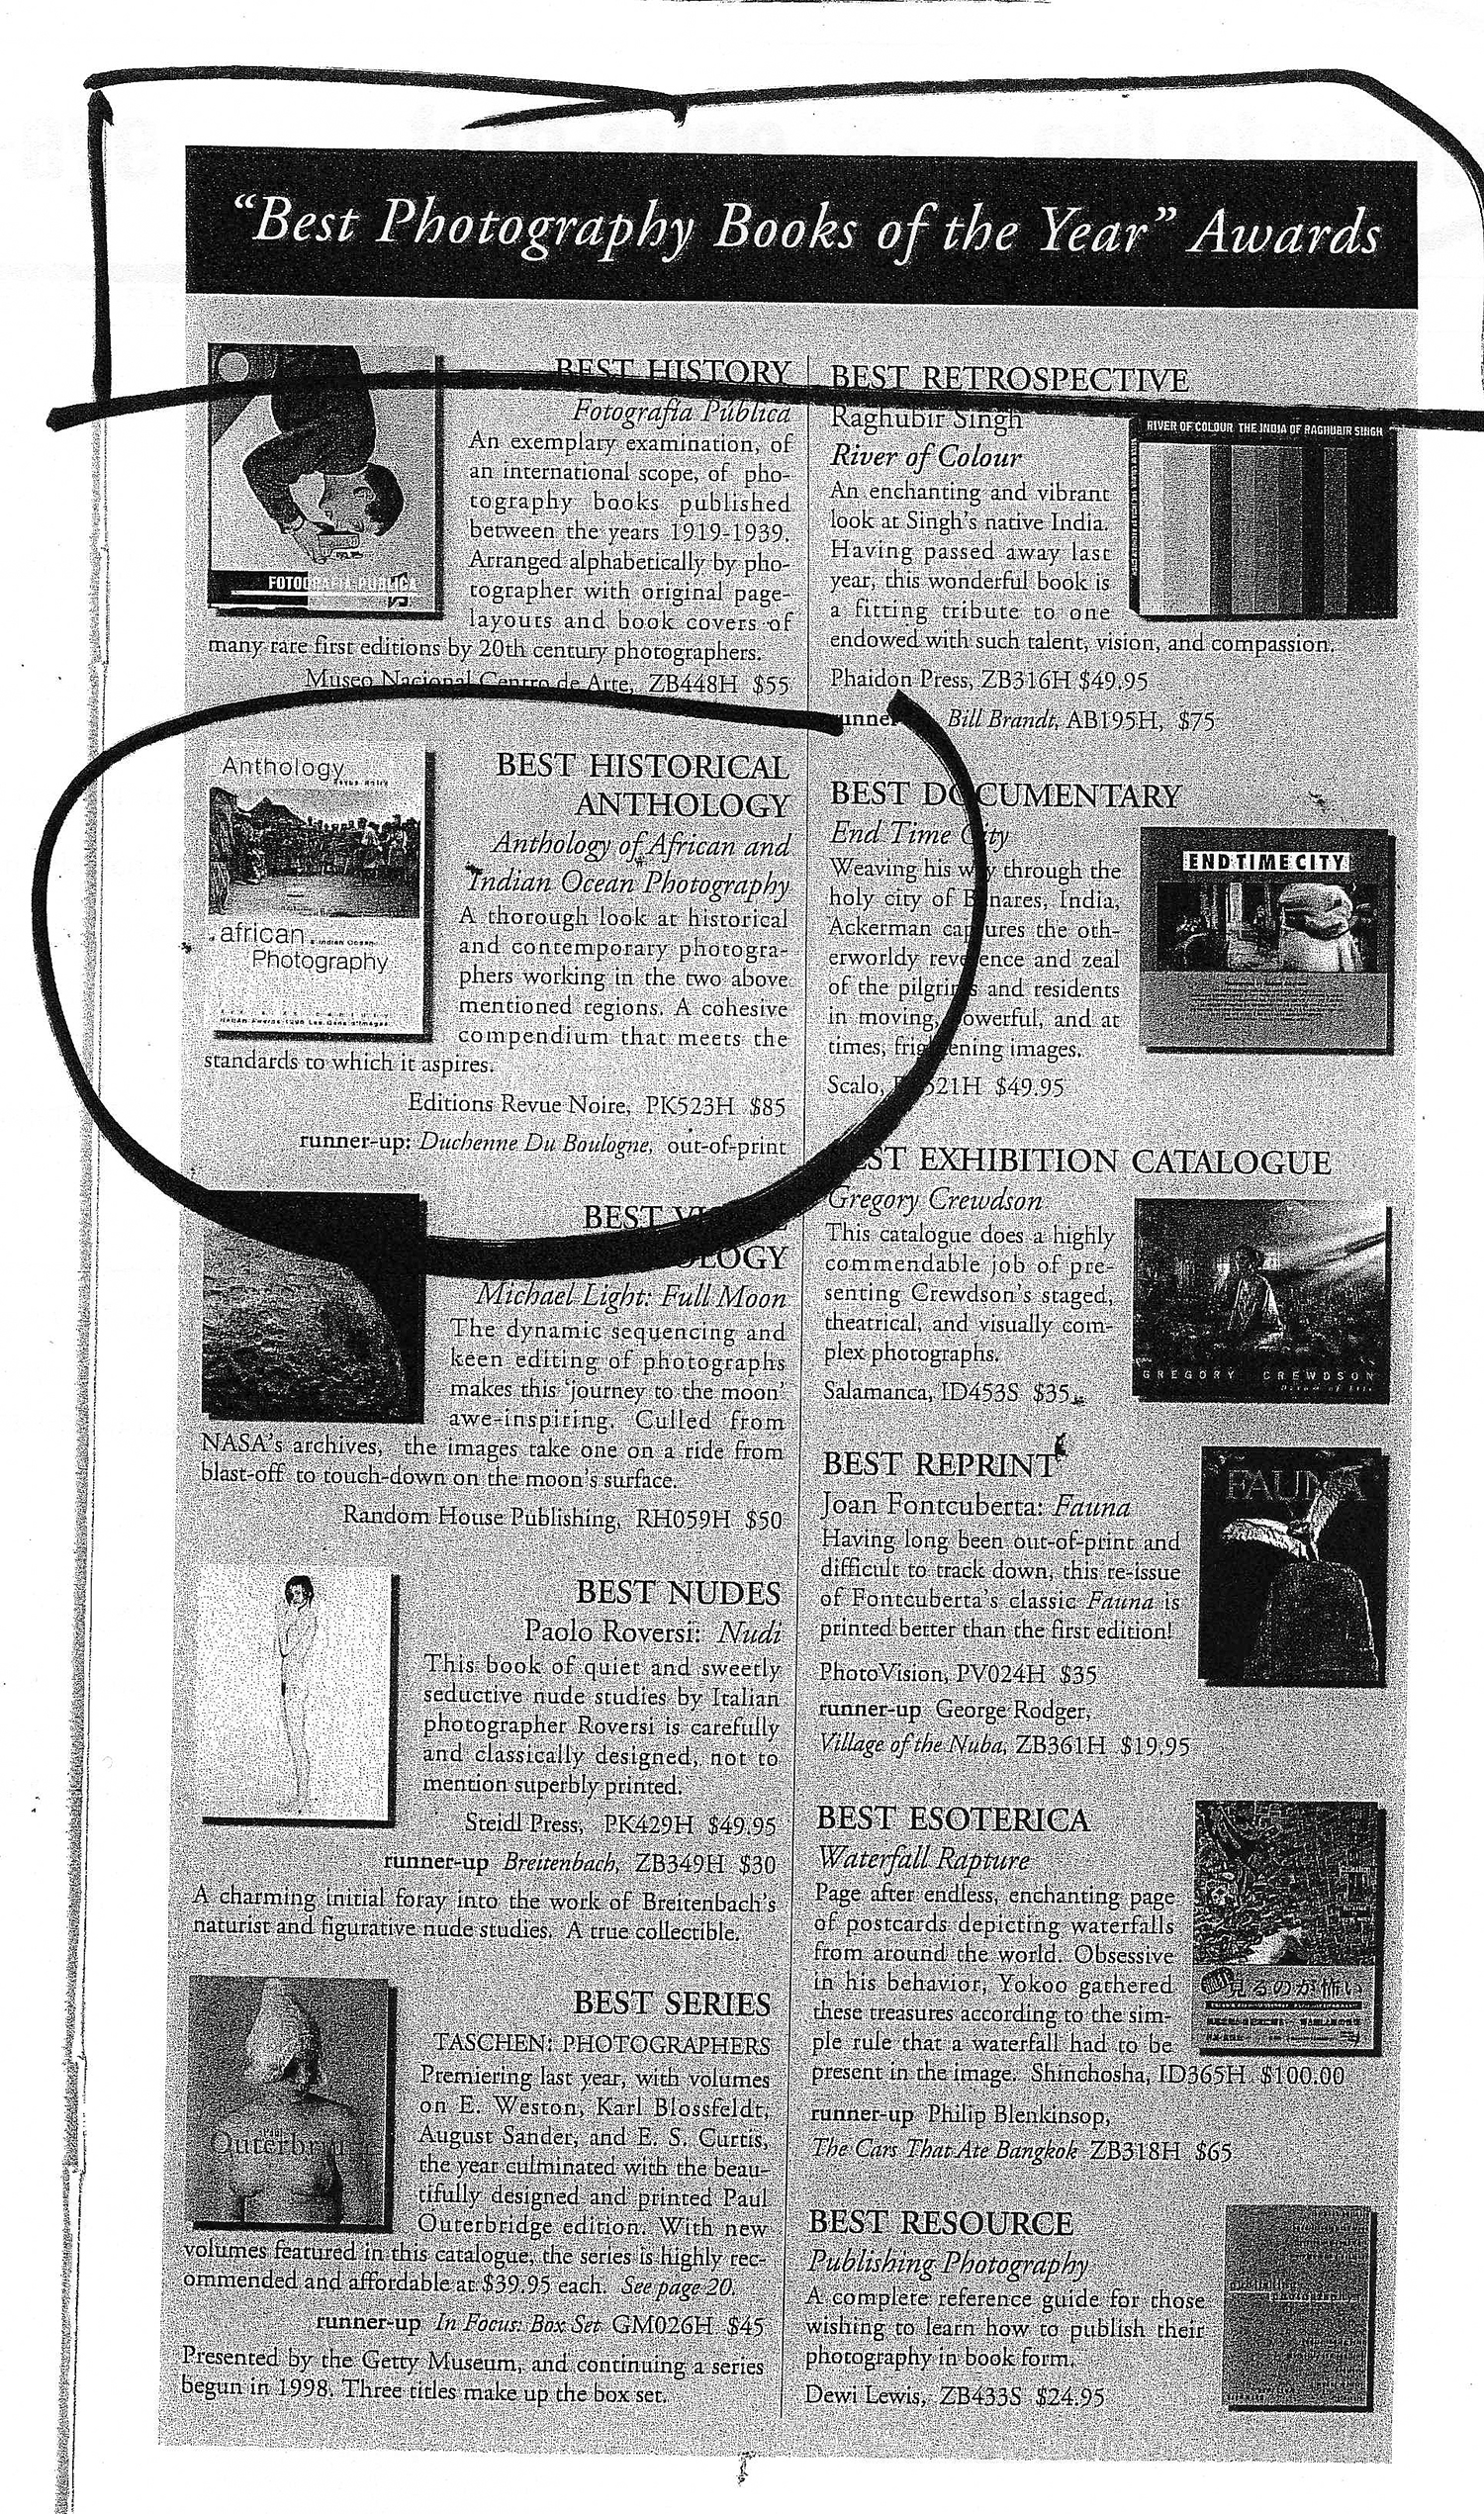 REVUE NOIRE revue de presse: New York Times dec 1999 Best Photographic Books of the Year Awards 1999: Anthology of African Photography, Revue Noire-DAP éditions